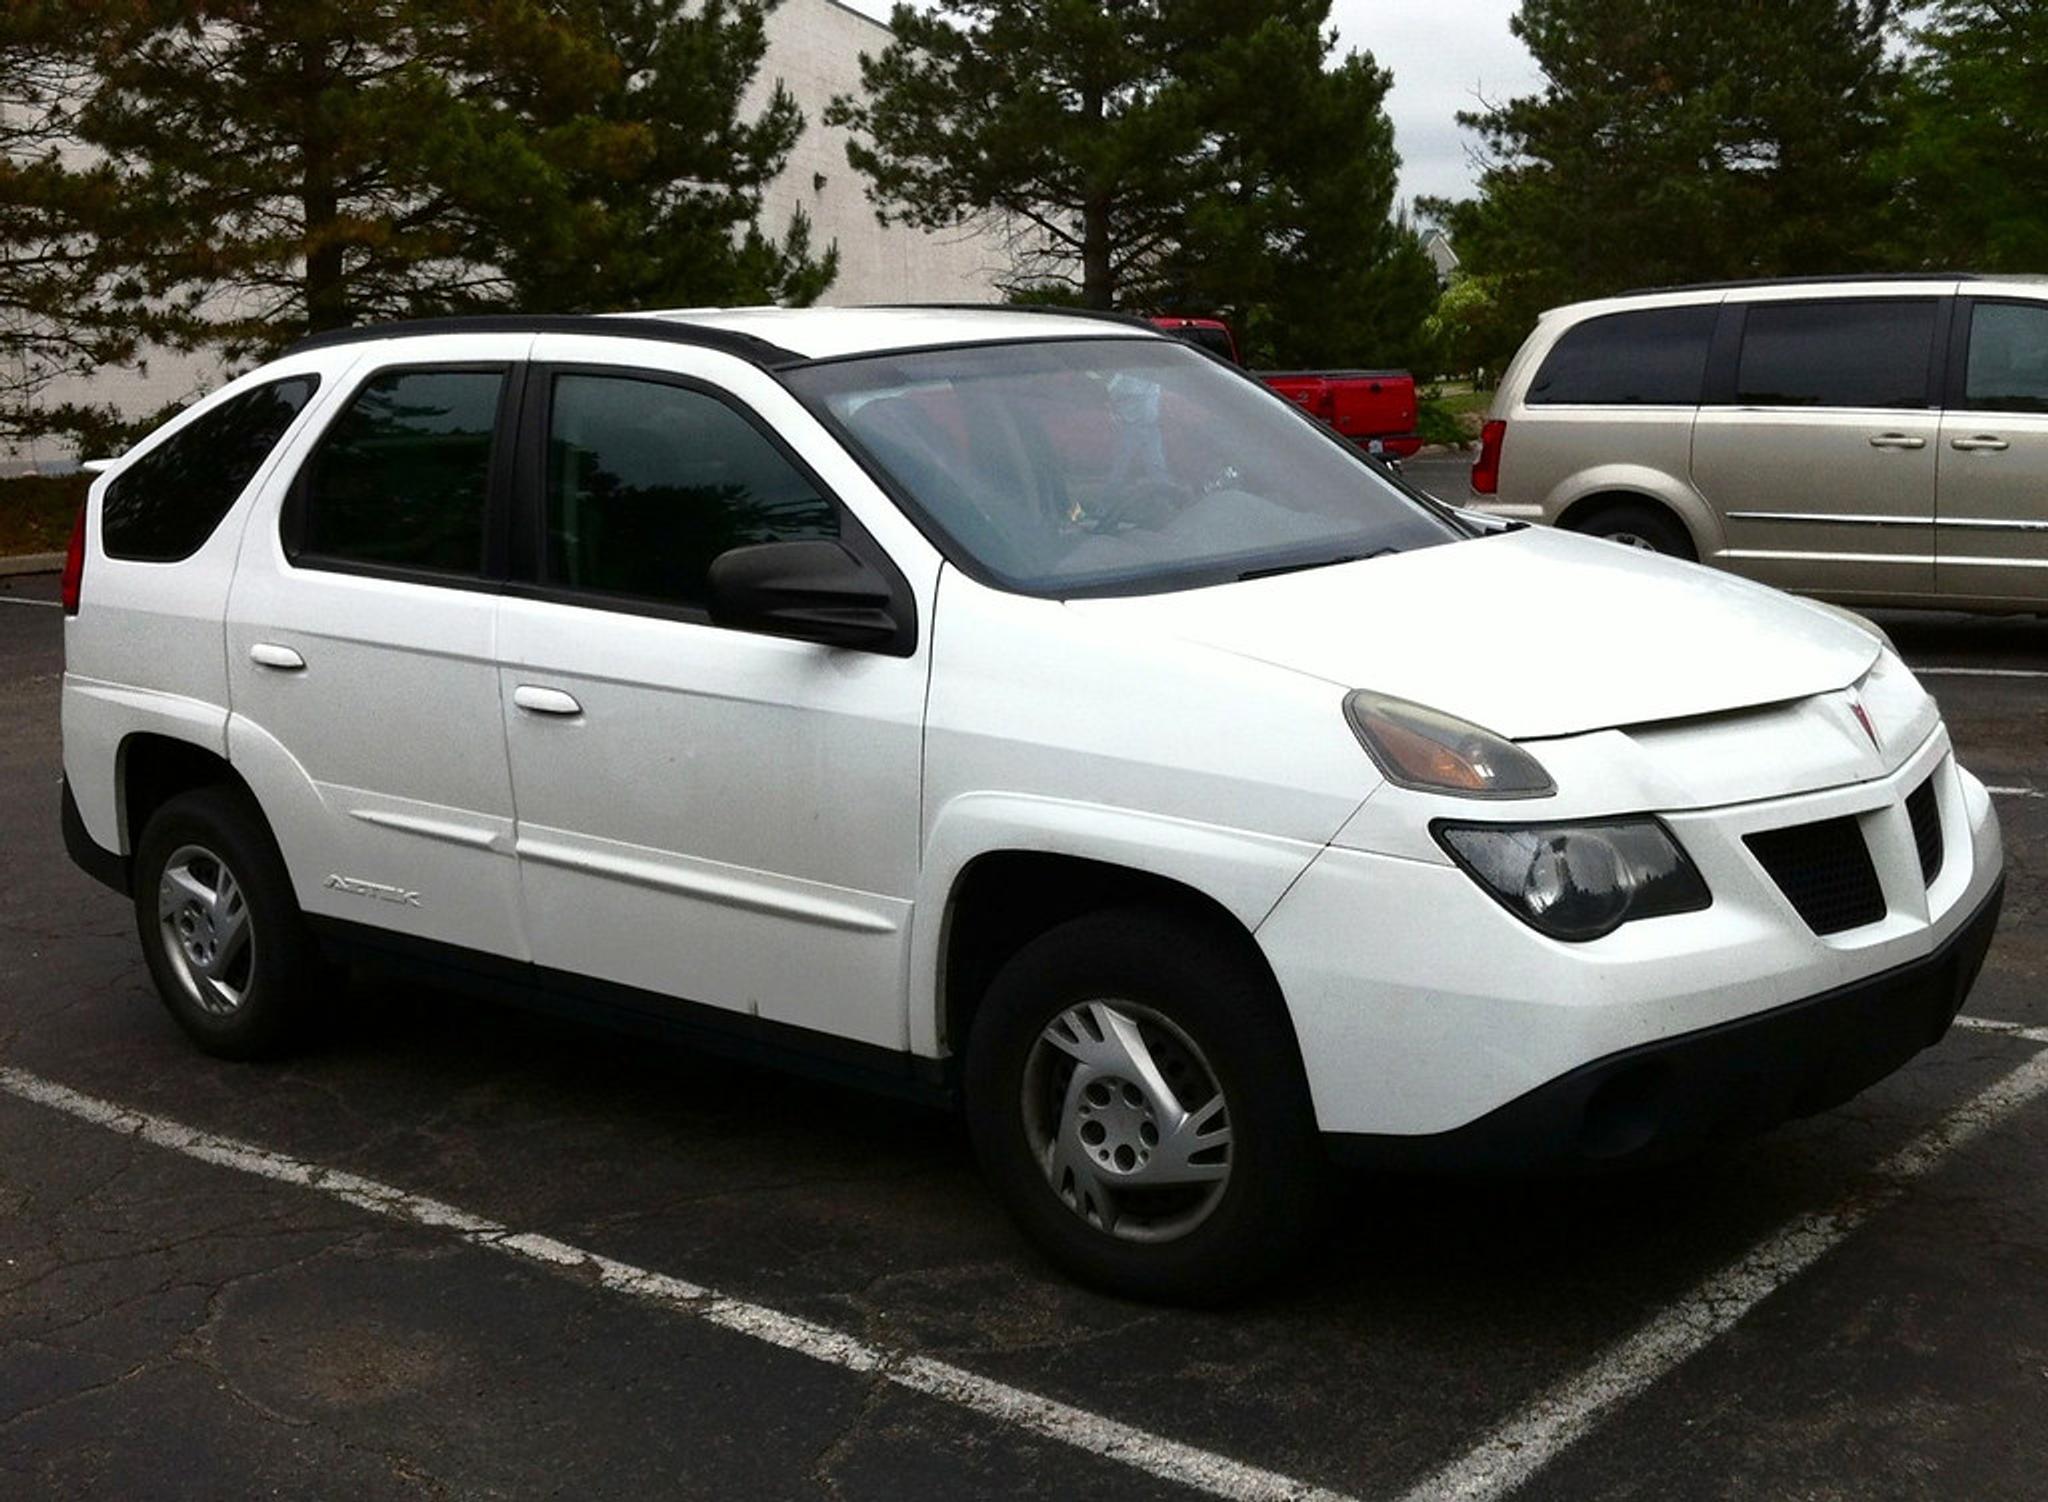 White Pontiac Aztek in the parking lot